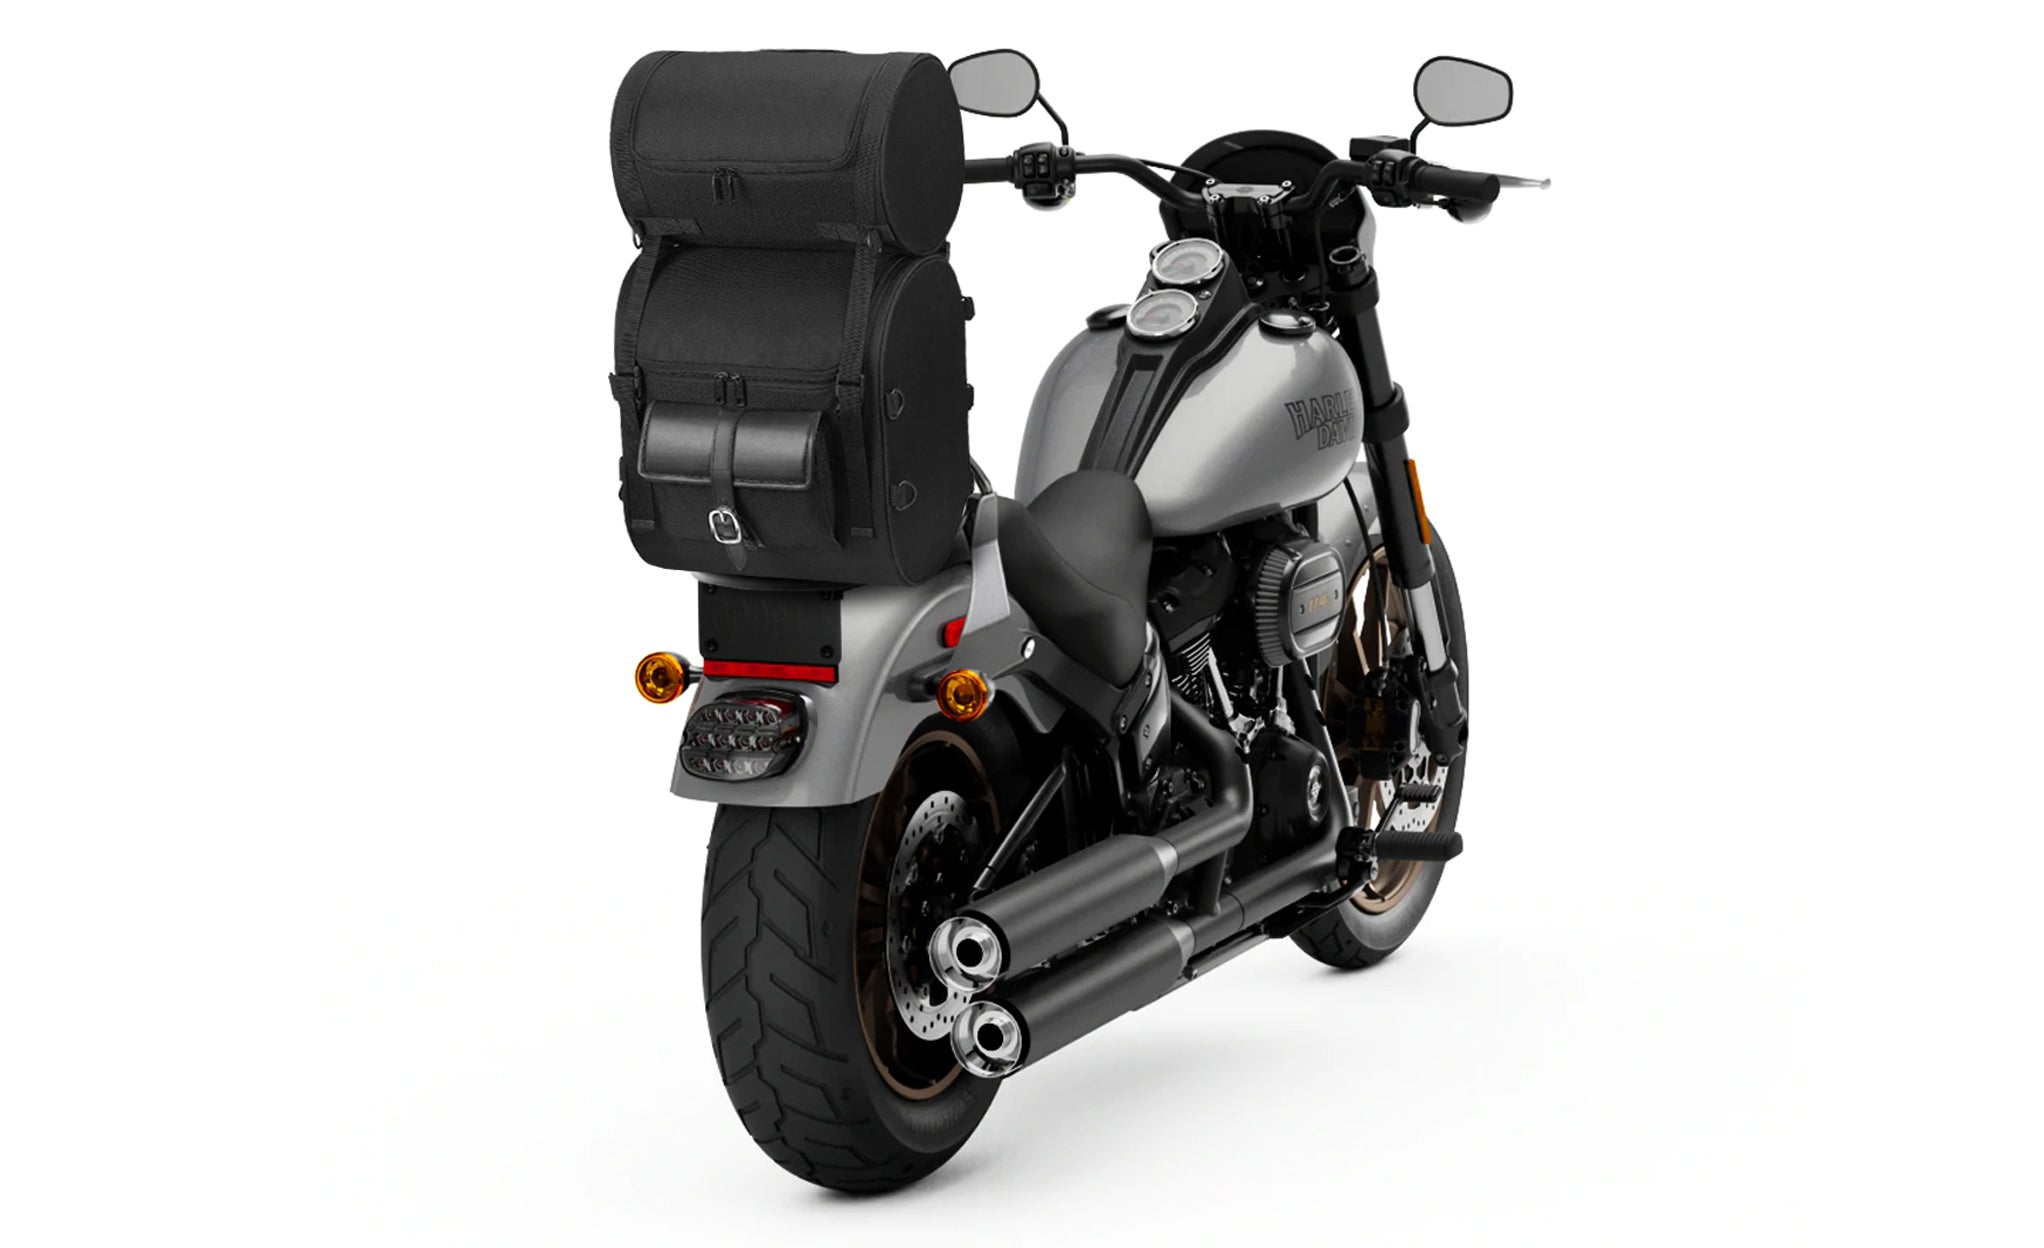 Viking Economy Line Medium Triumph Motorcycle Sissy Bar Bag Bag on Bike View @expand